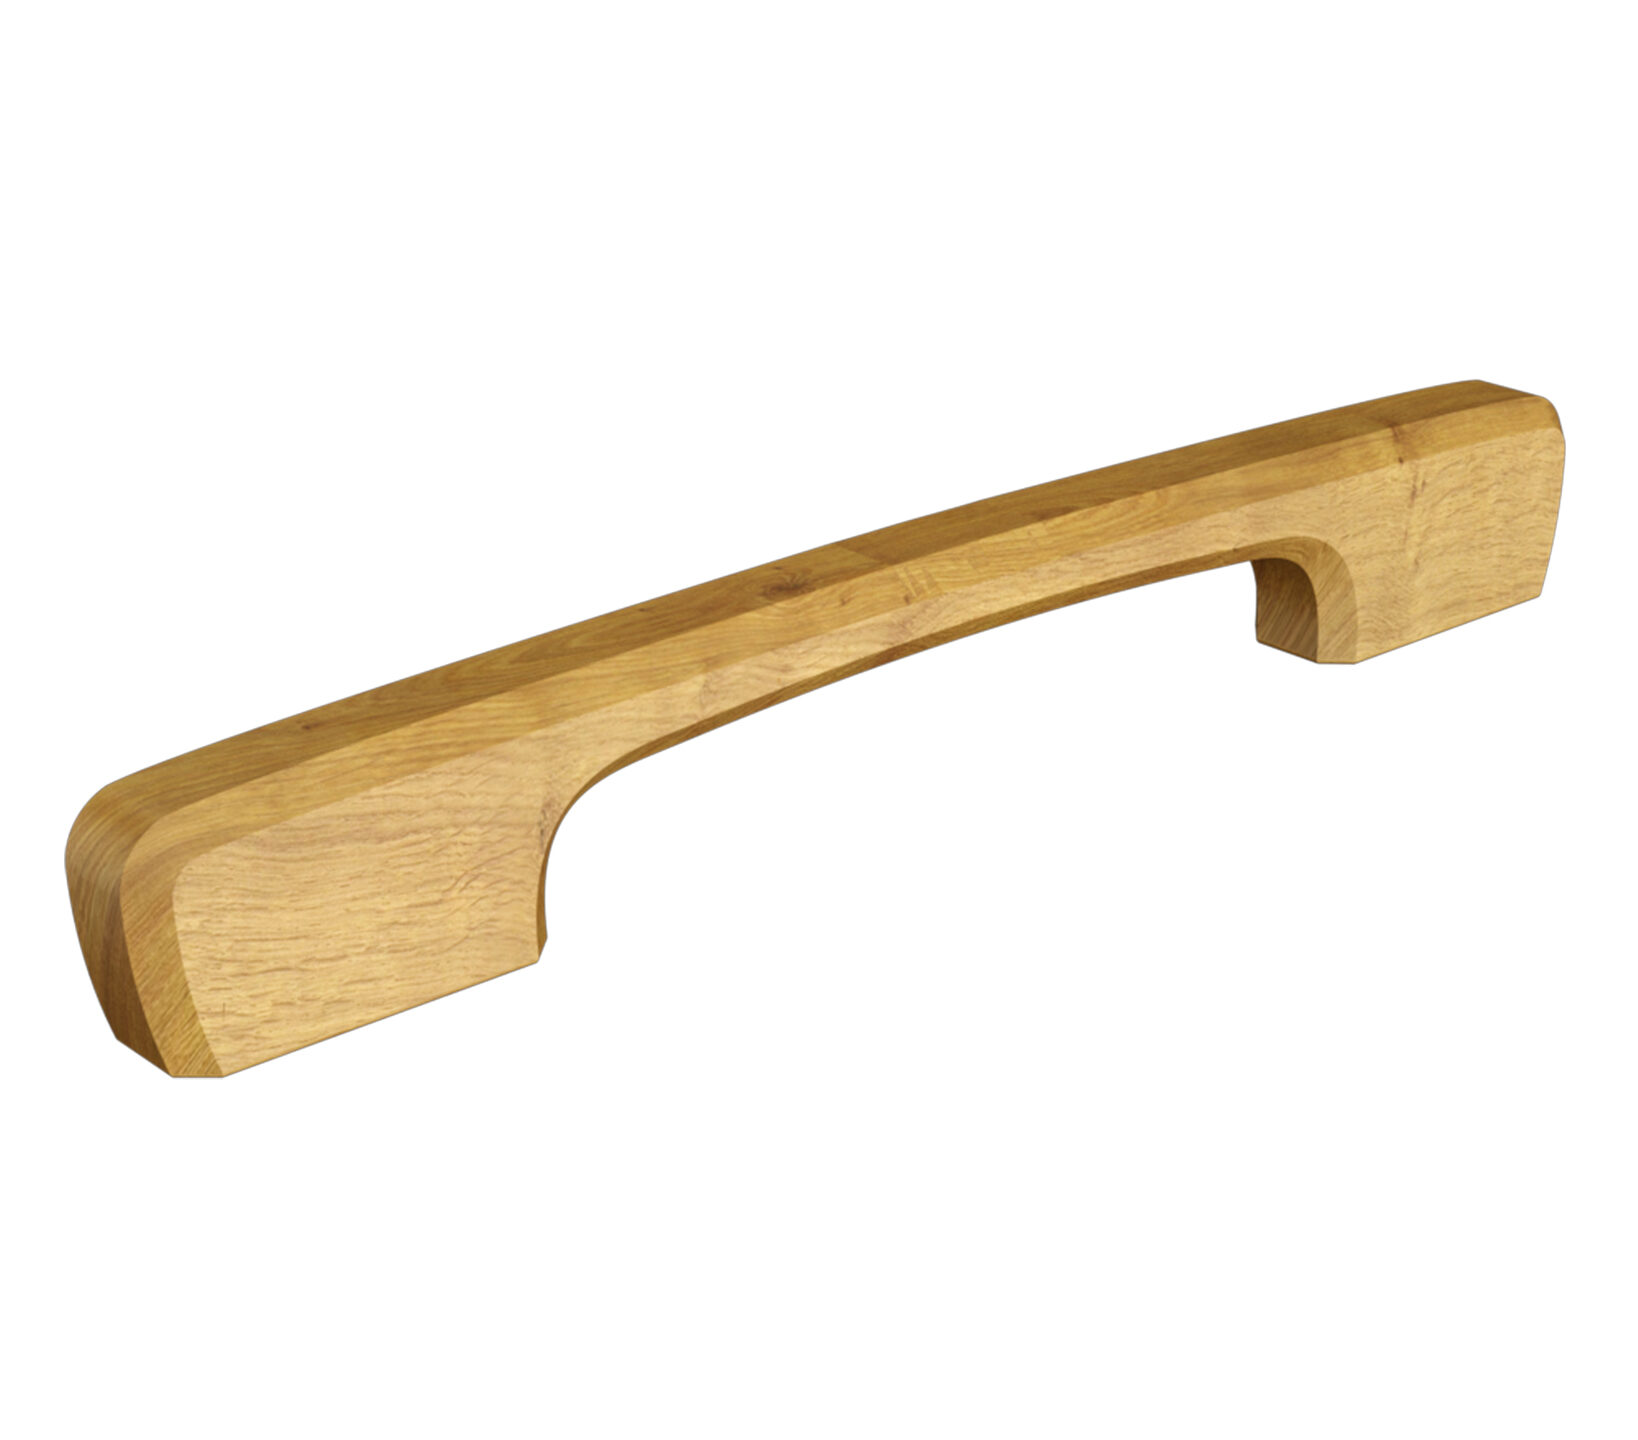 Furniture handles U-2004 made of solid wood